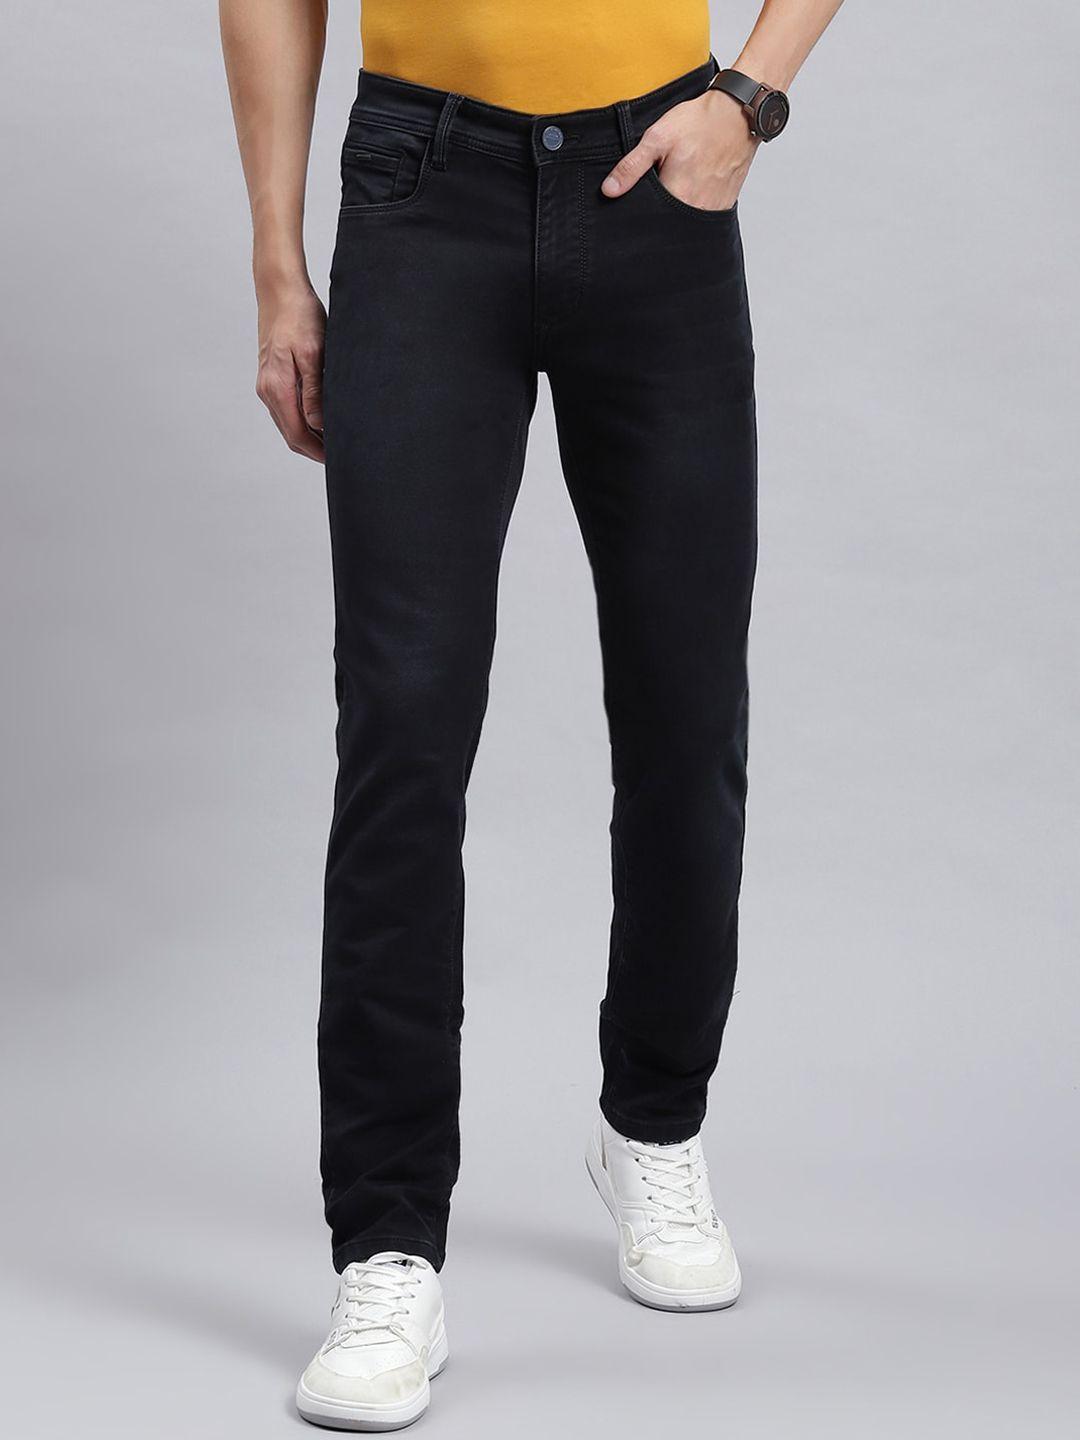 monte carlo smart mid-rise slim fit jeans